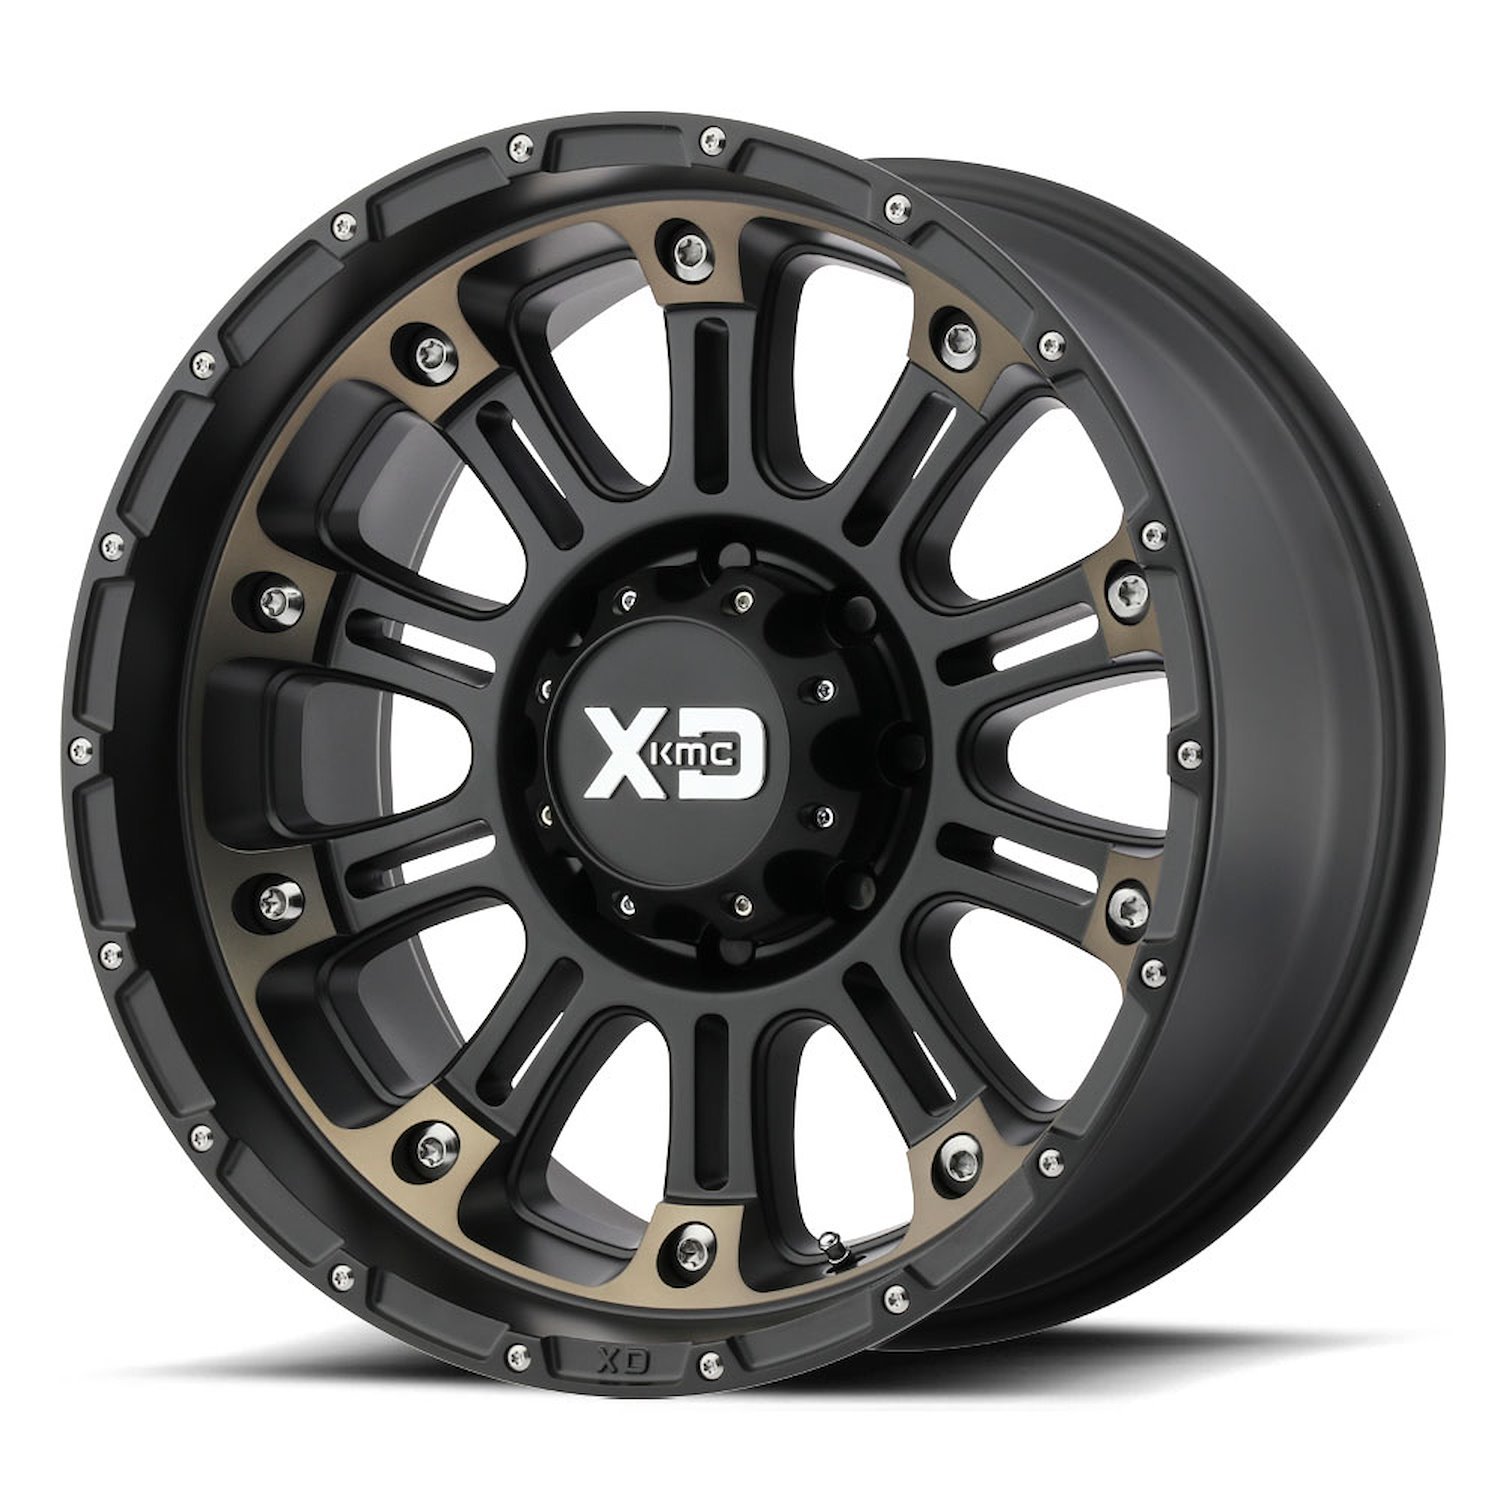 XD829 Series Hoss Wheel Size: 18'' x 9''